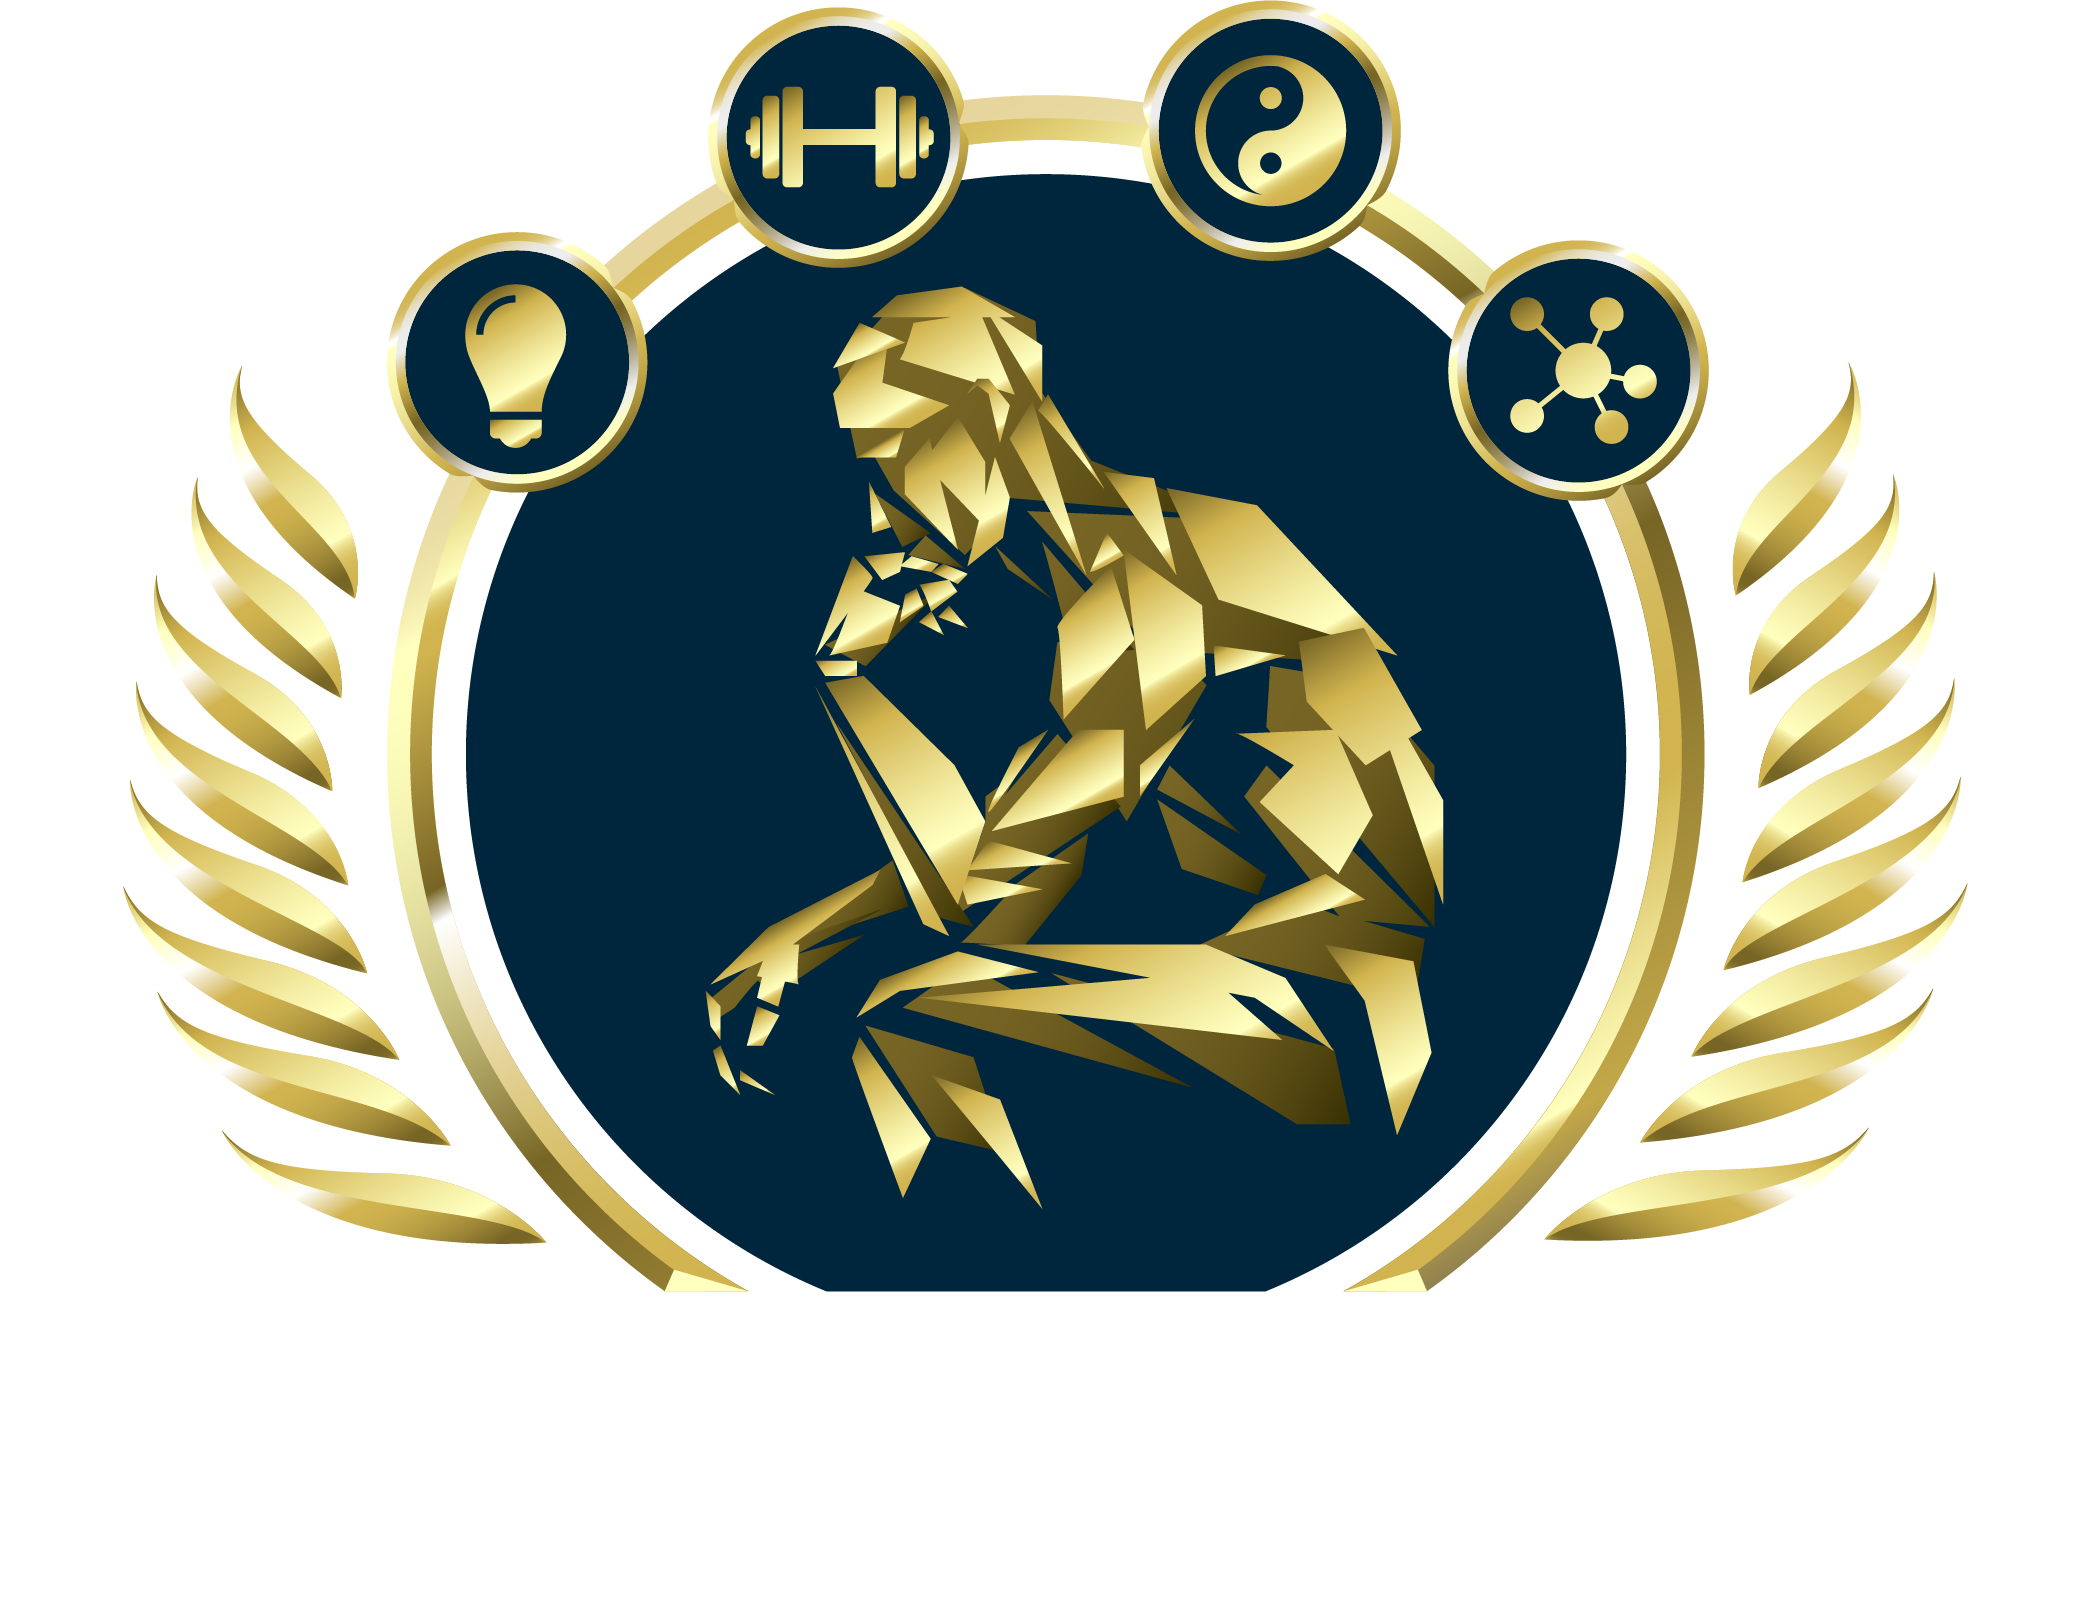 The Universal Man